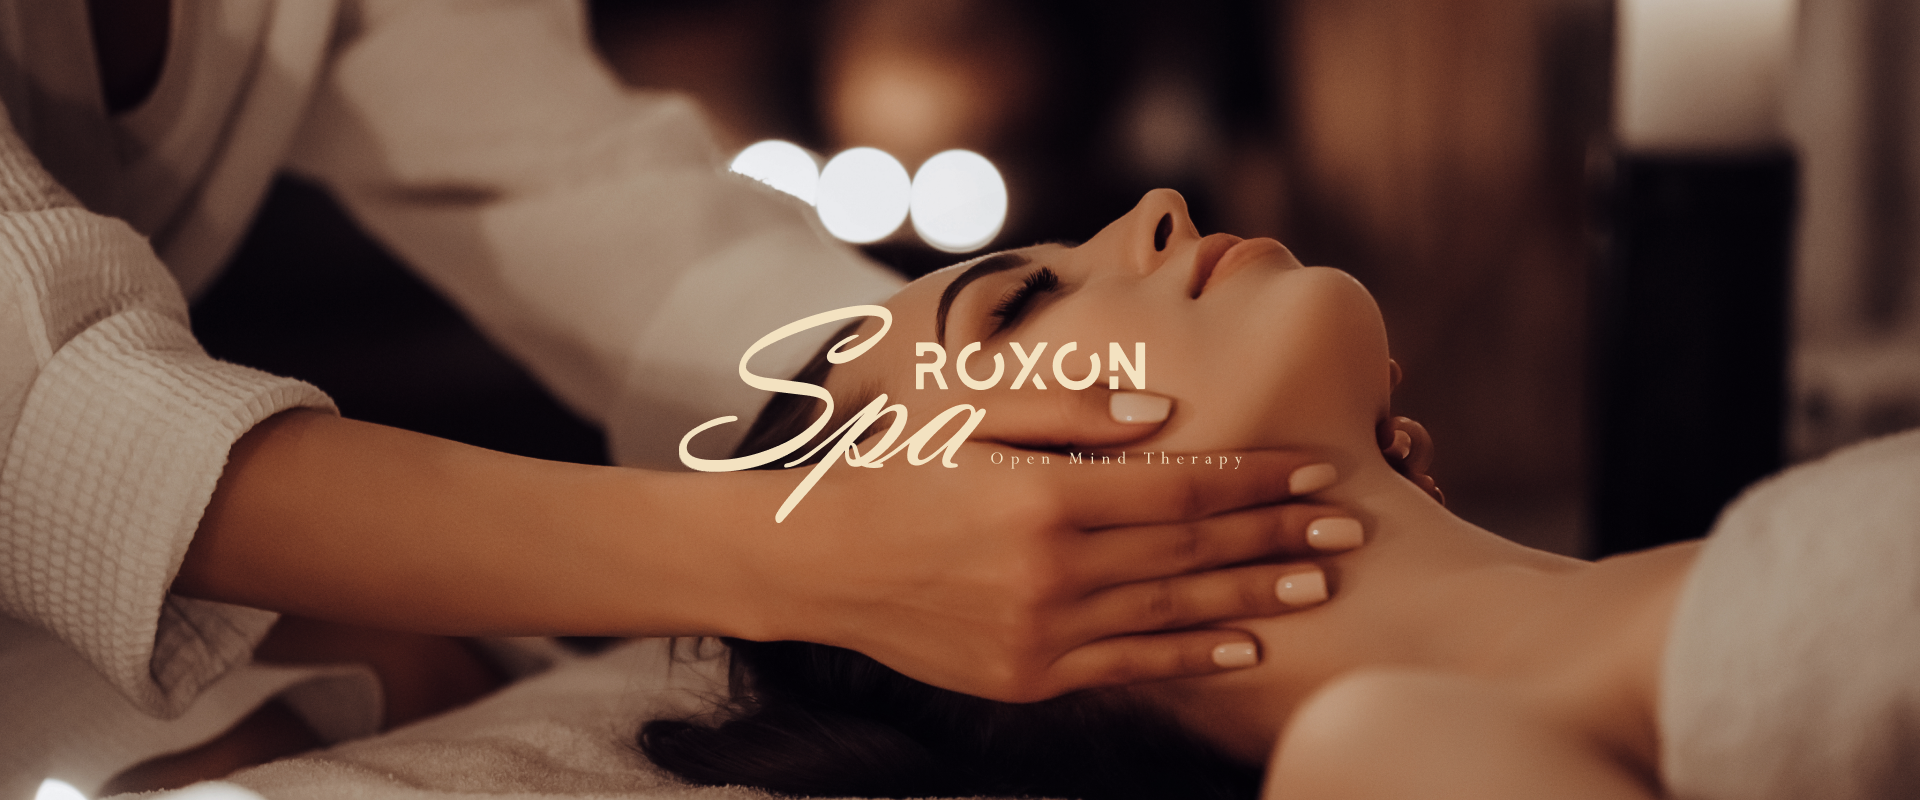 Roxon Hotels Spa